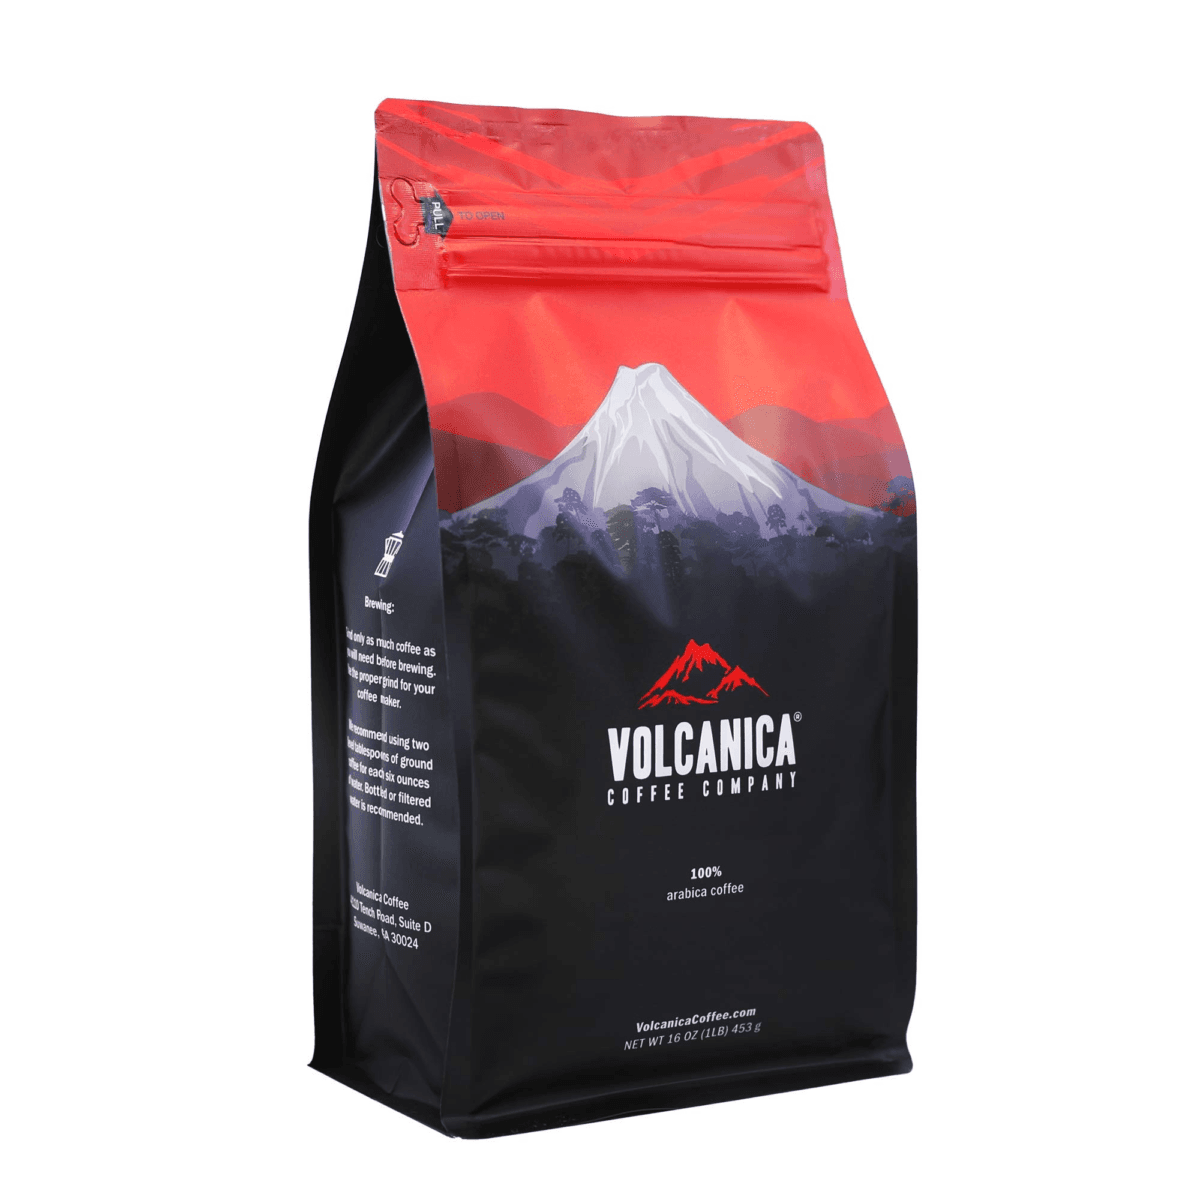 (Courtesy of Volcanica Coffee)